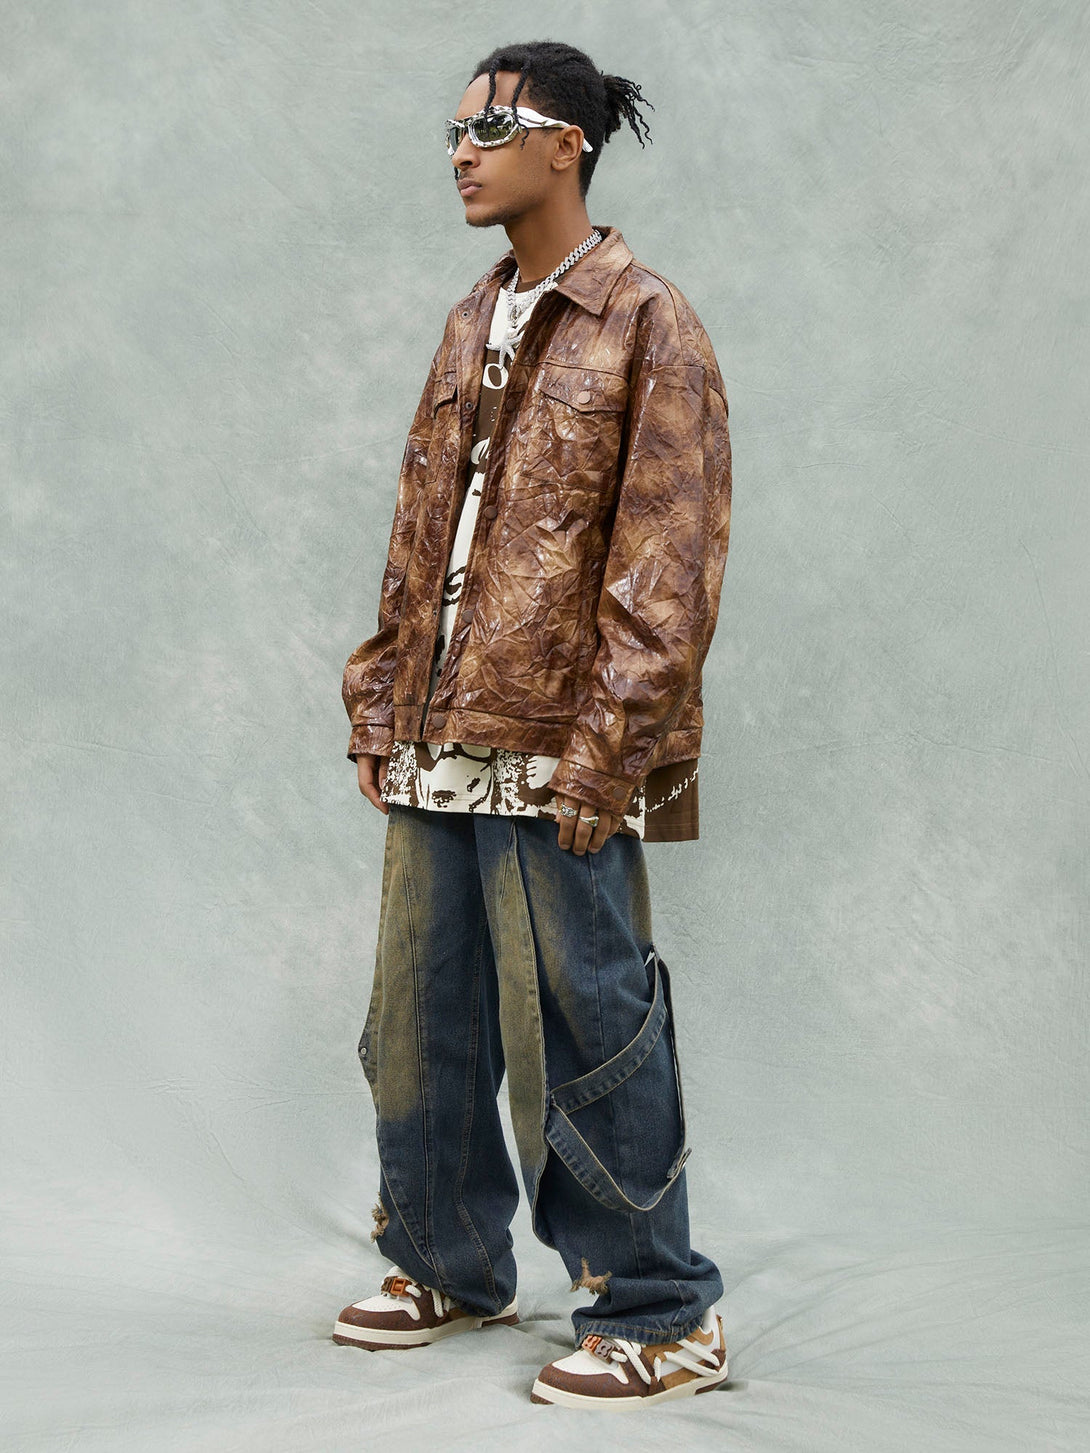 Majesda® - Leather Pleated Slim Fit Brown Jacket- Outfit Ideas - Streetwear Fashion - majesda.com